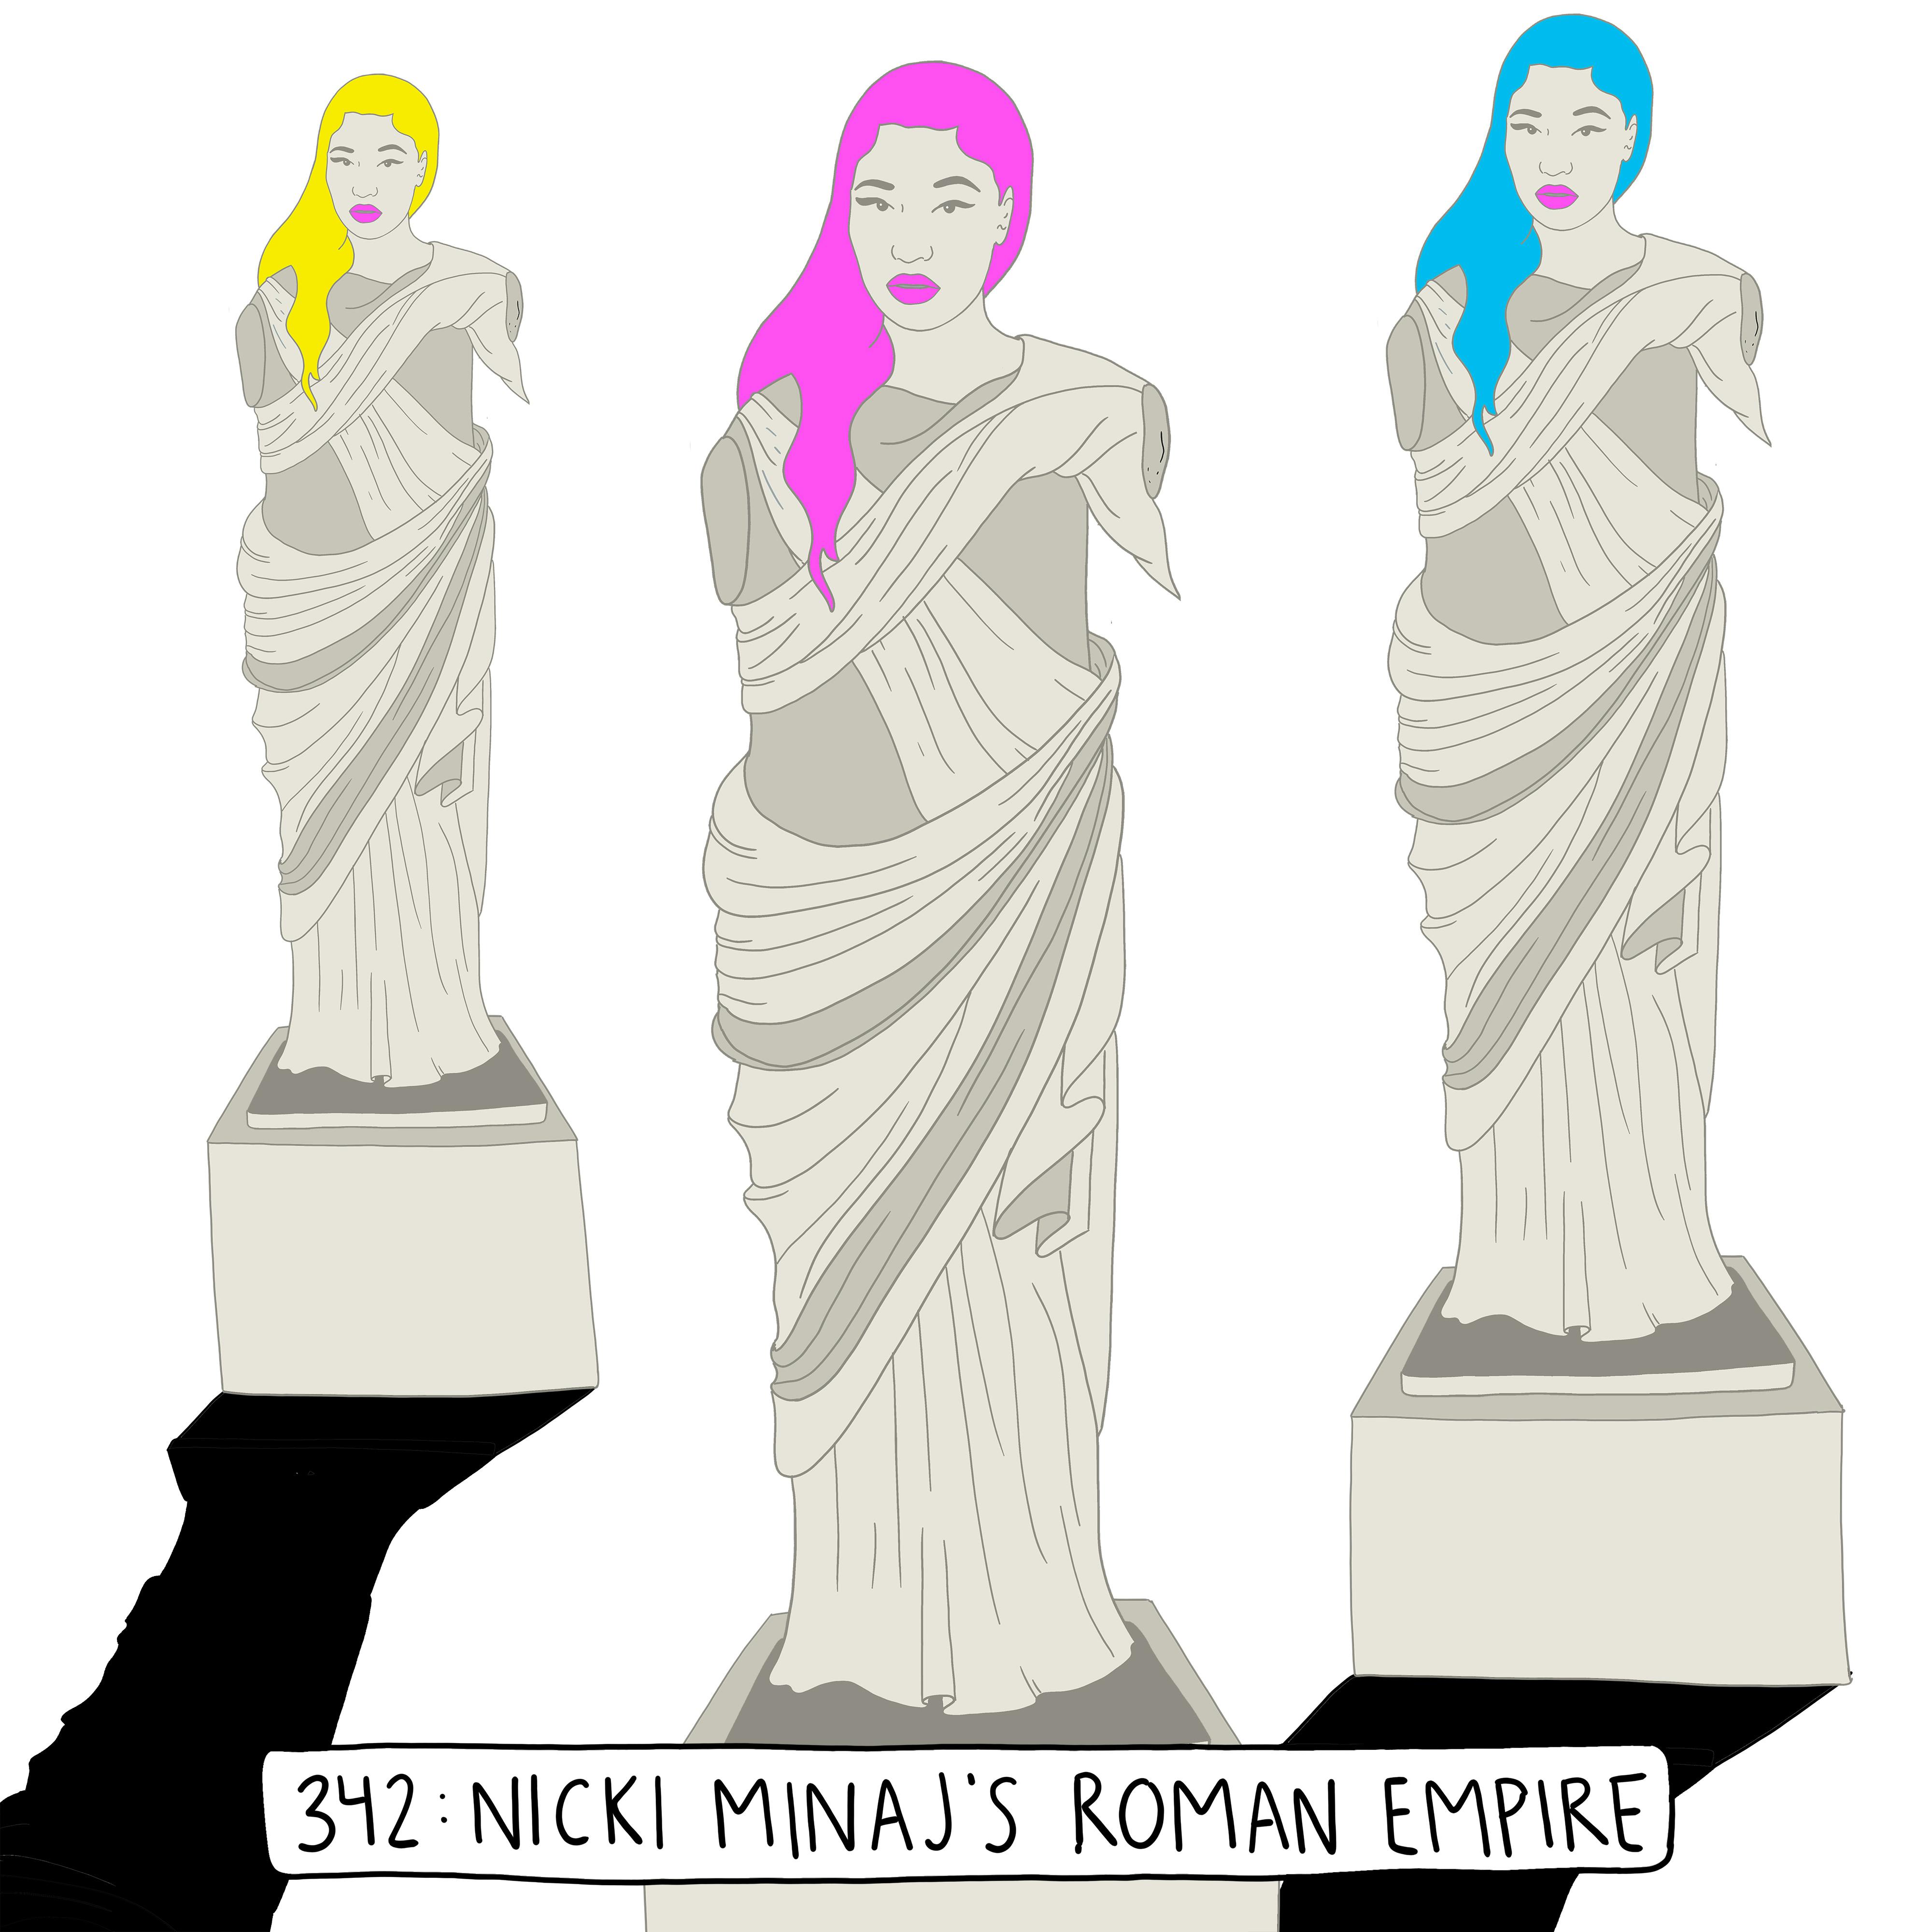 Nicki Minaj’s Roman Empire